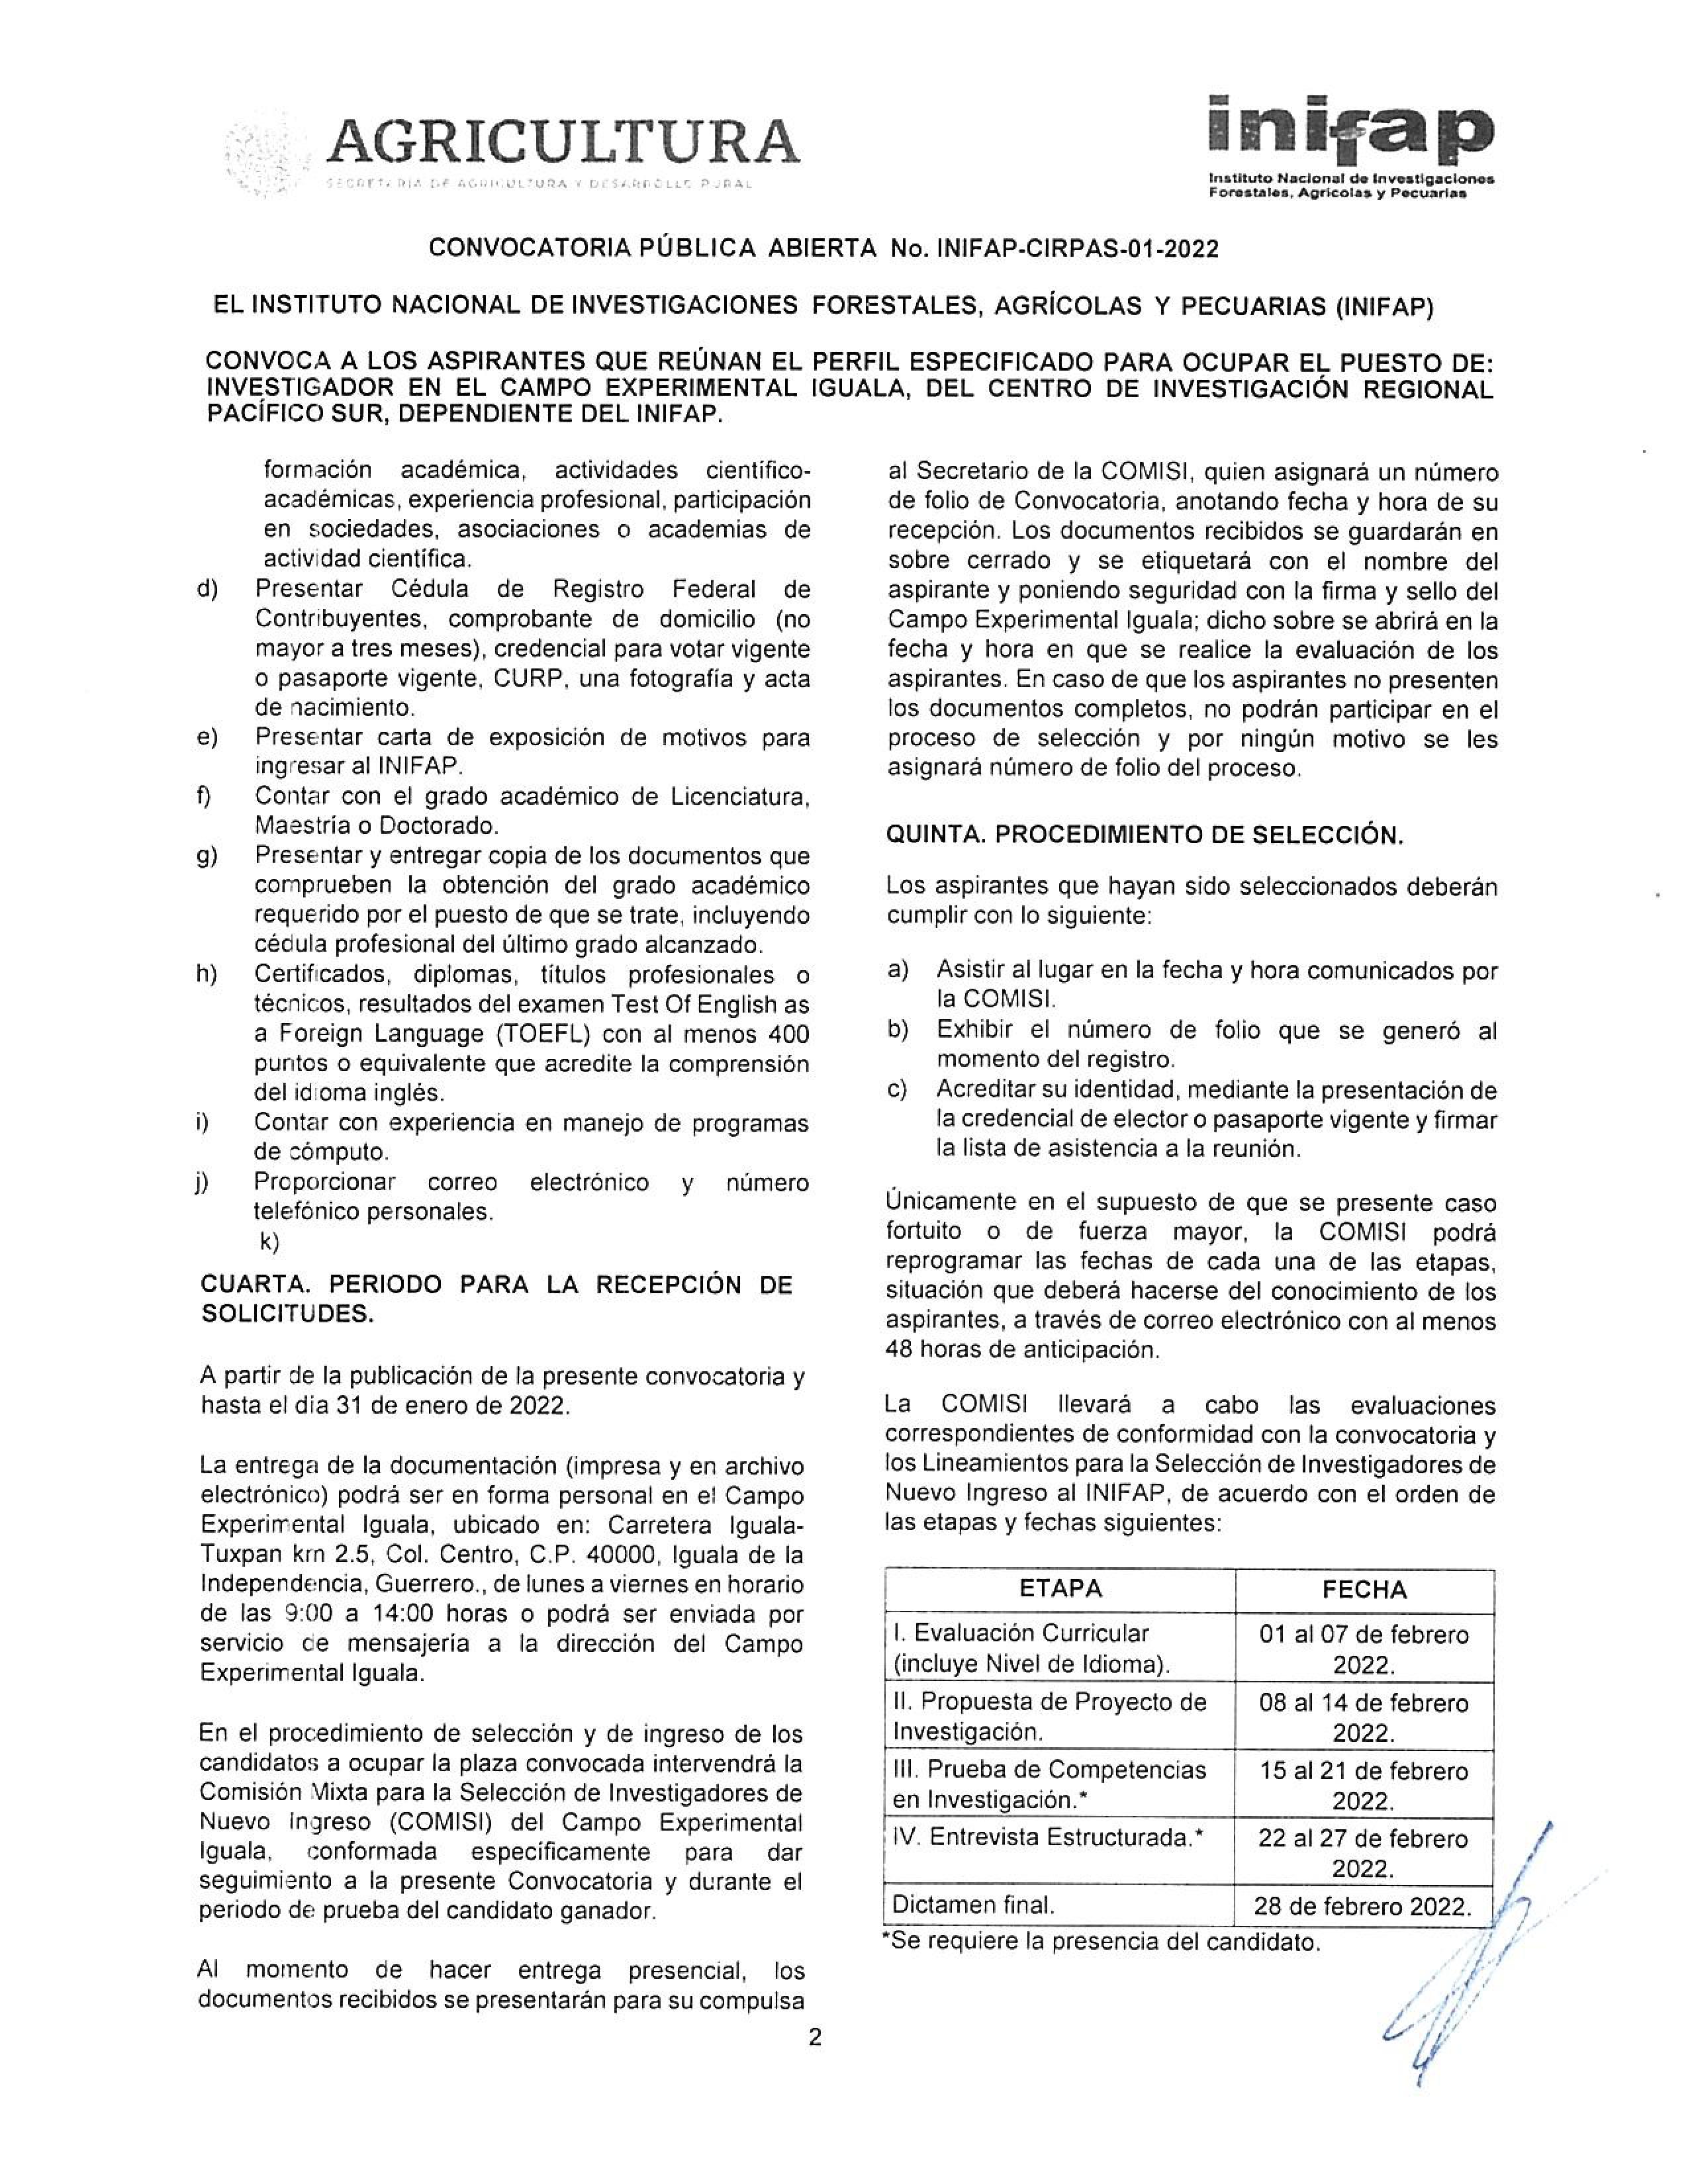 CONVOCATORIA PUBLICA ABIERTA NO. INIFAP-CIRPAS-01-2022 PAG.2